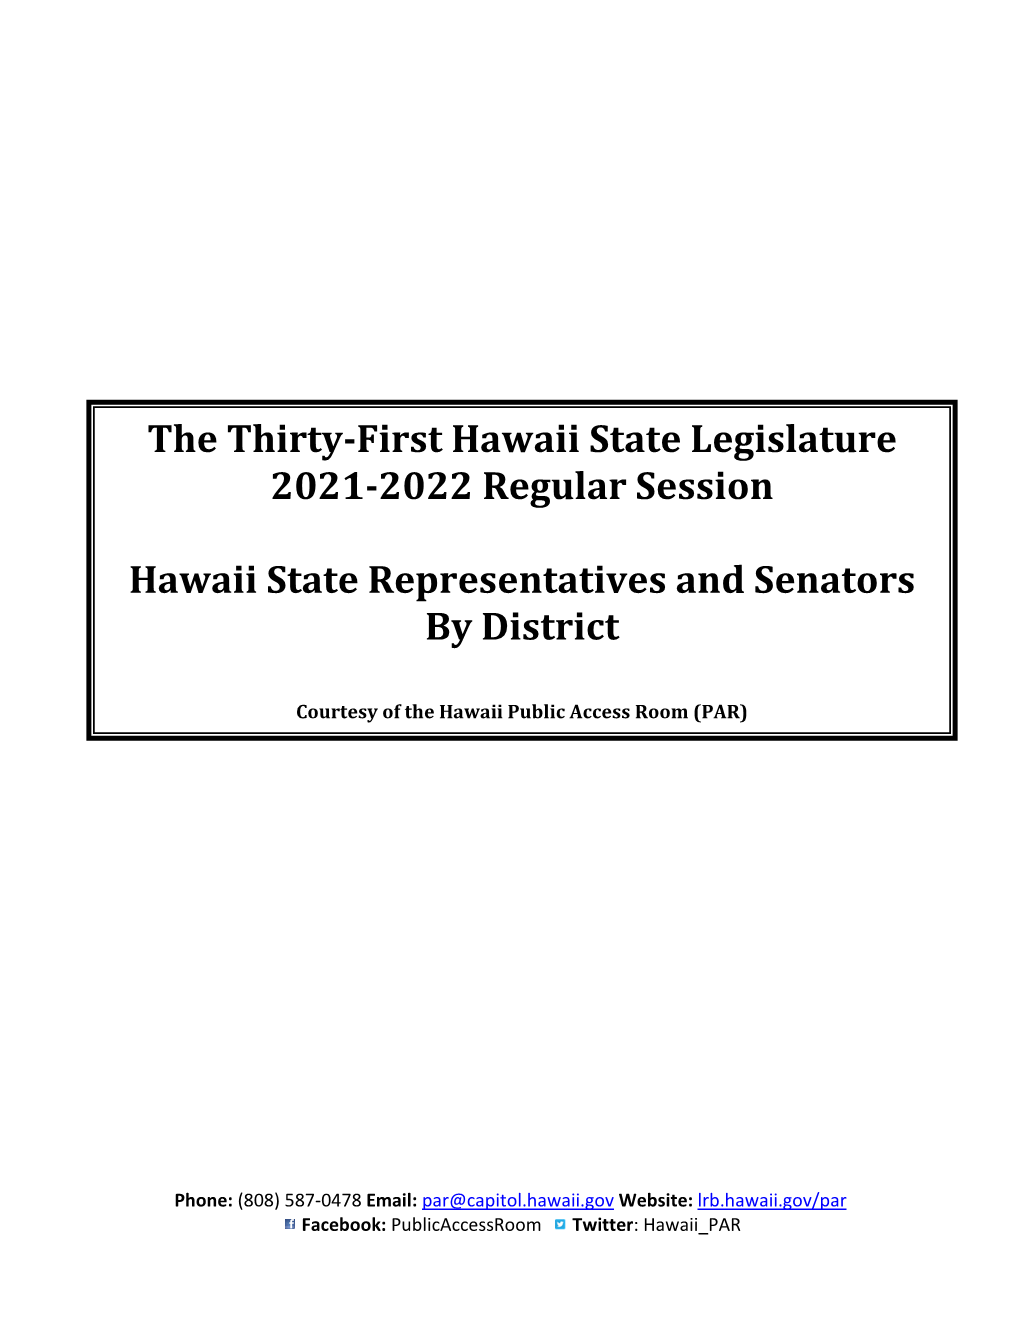 The Thirty-First Hawaii State Legislature 2021-2022 Regular Session